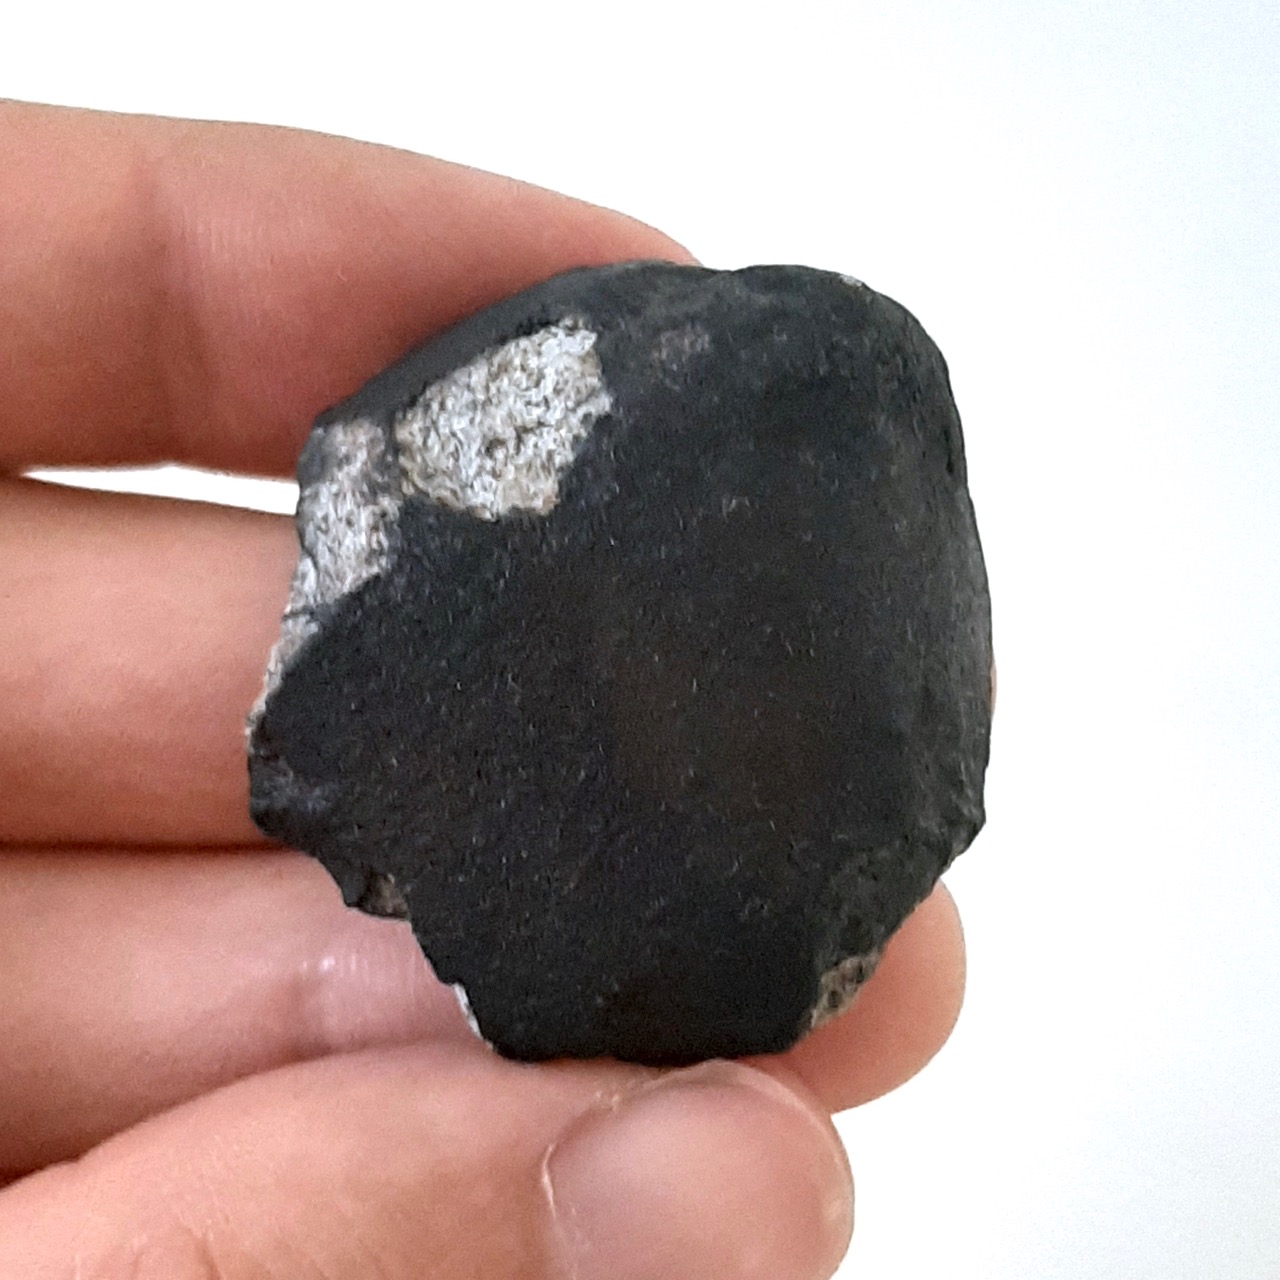 Viñales meteorite. L6 chondrite. 50% crust.